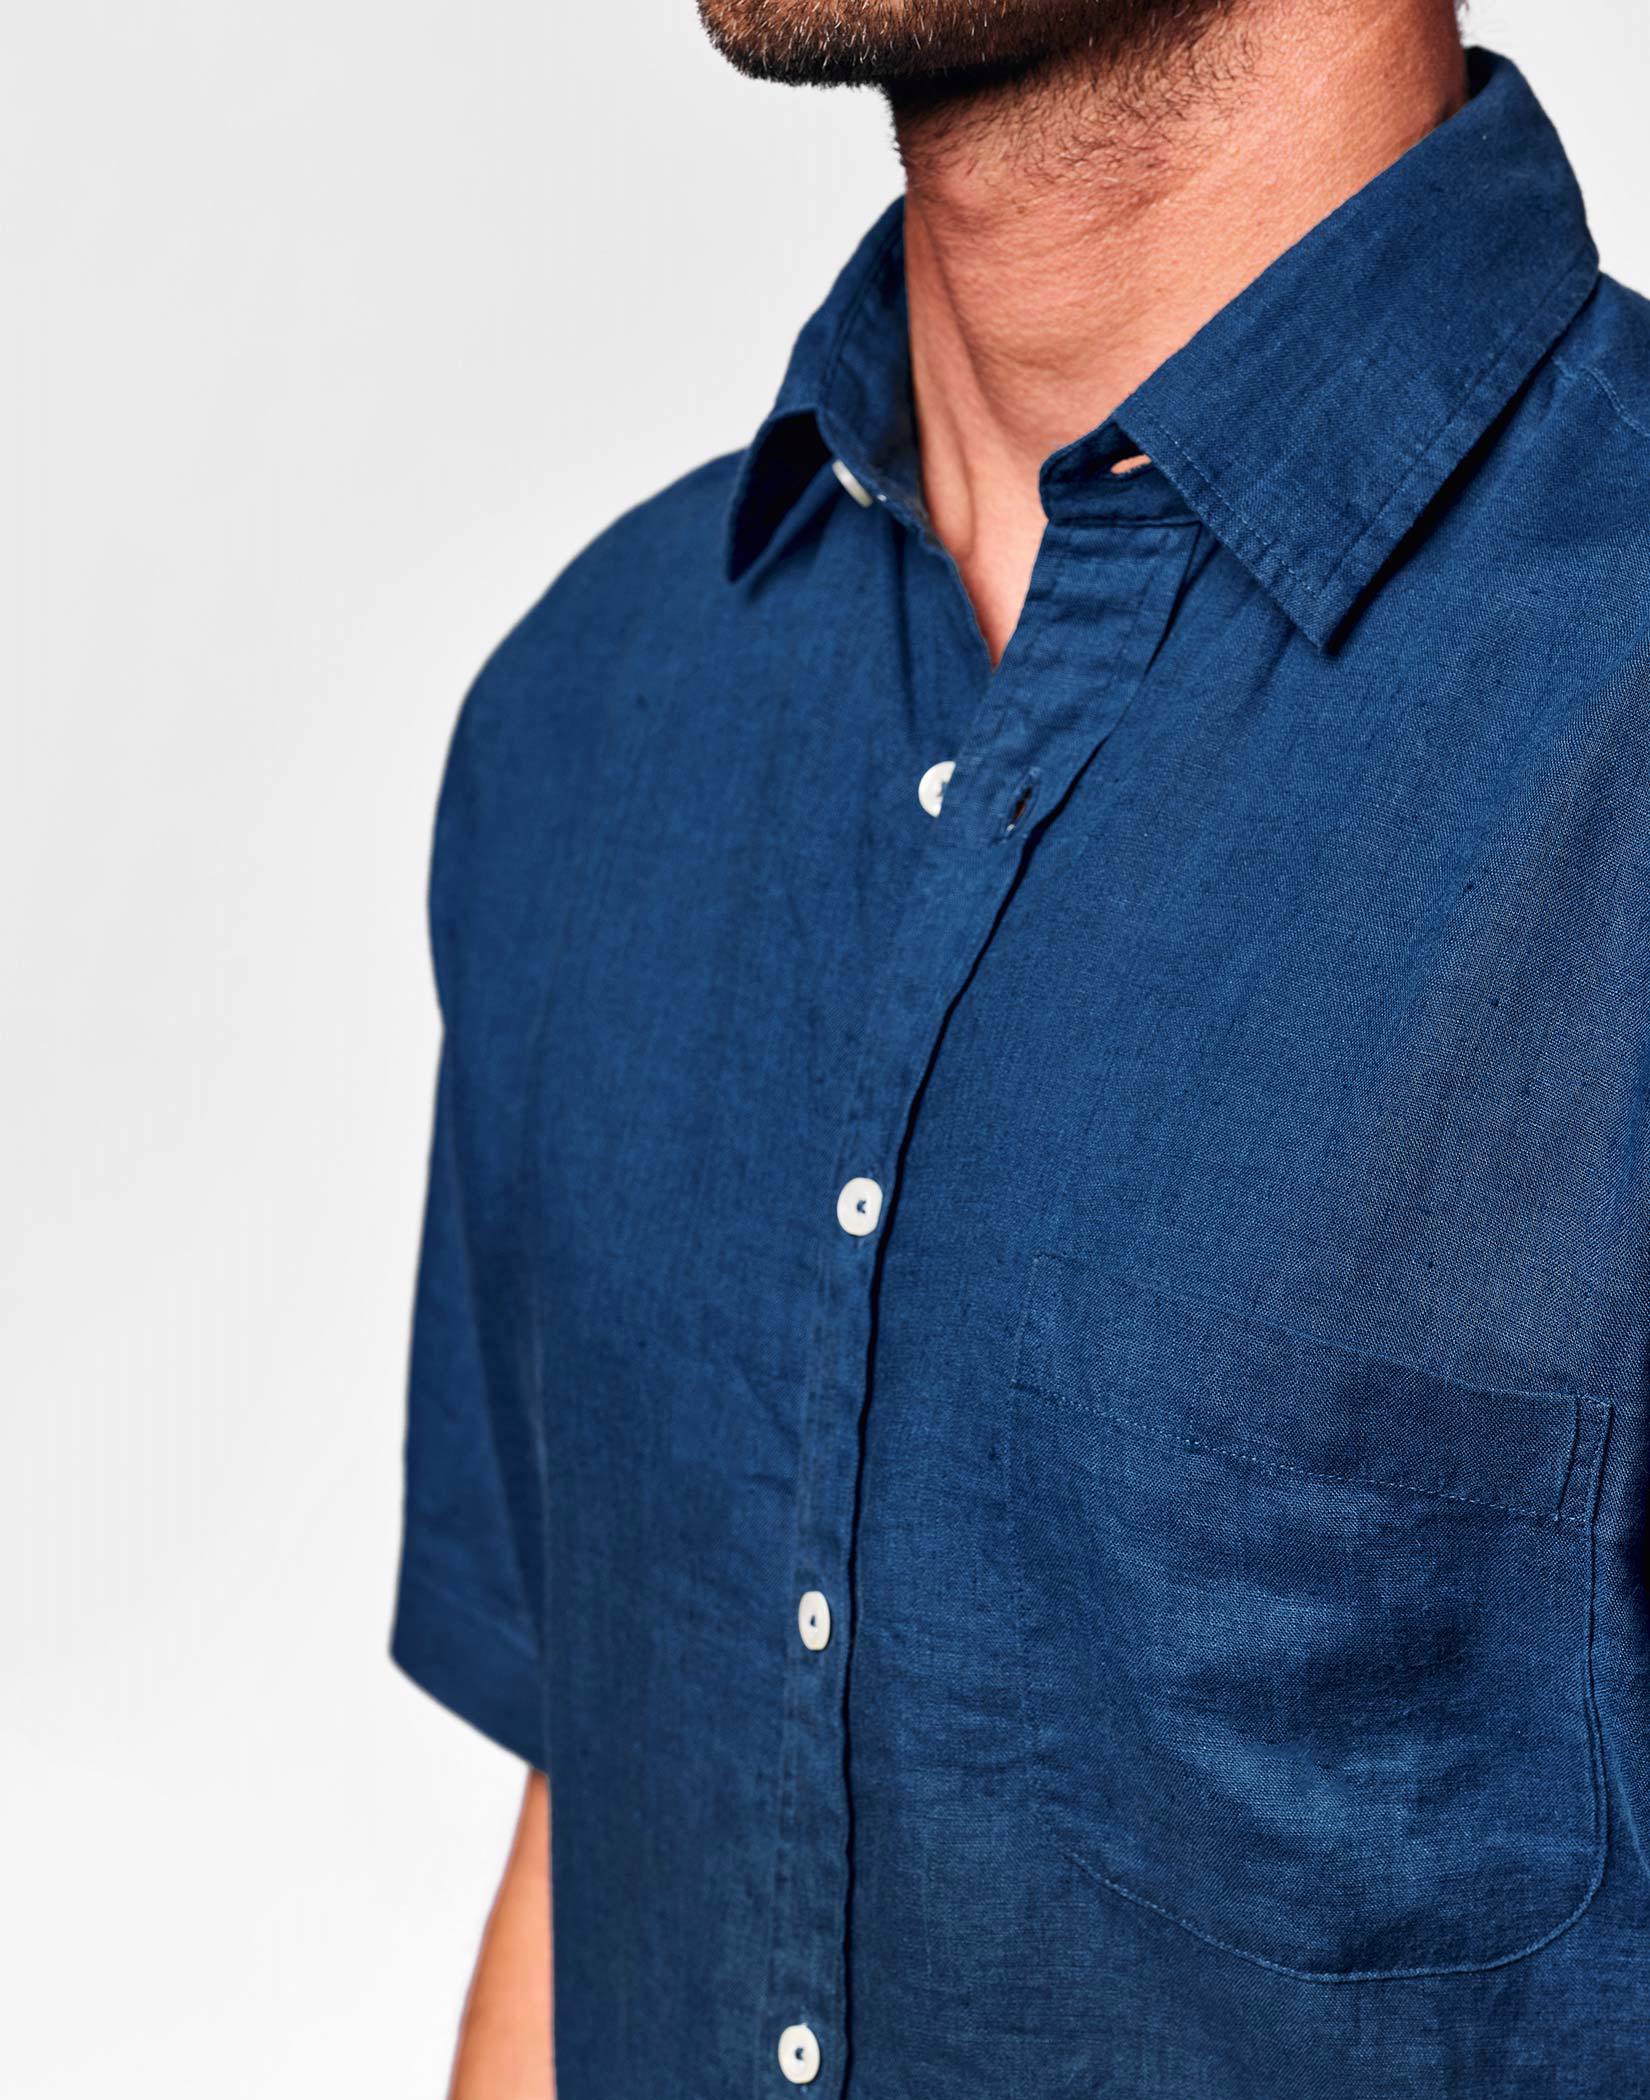 Linen Shirt Short Sleeve - Atlantic